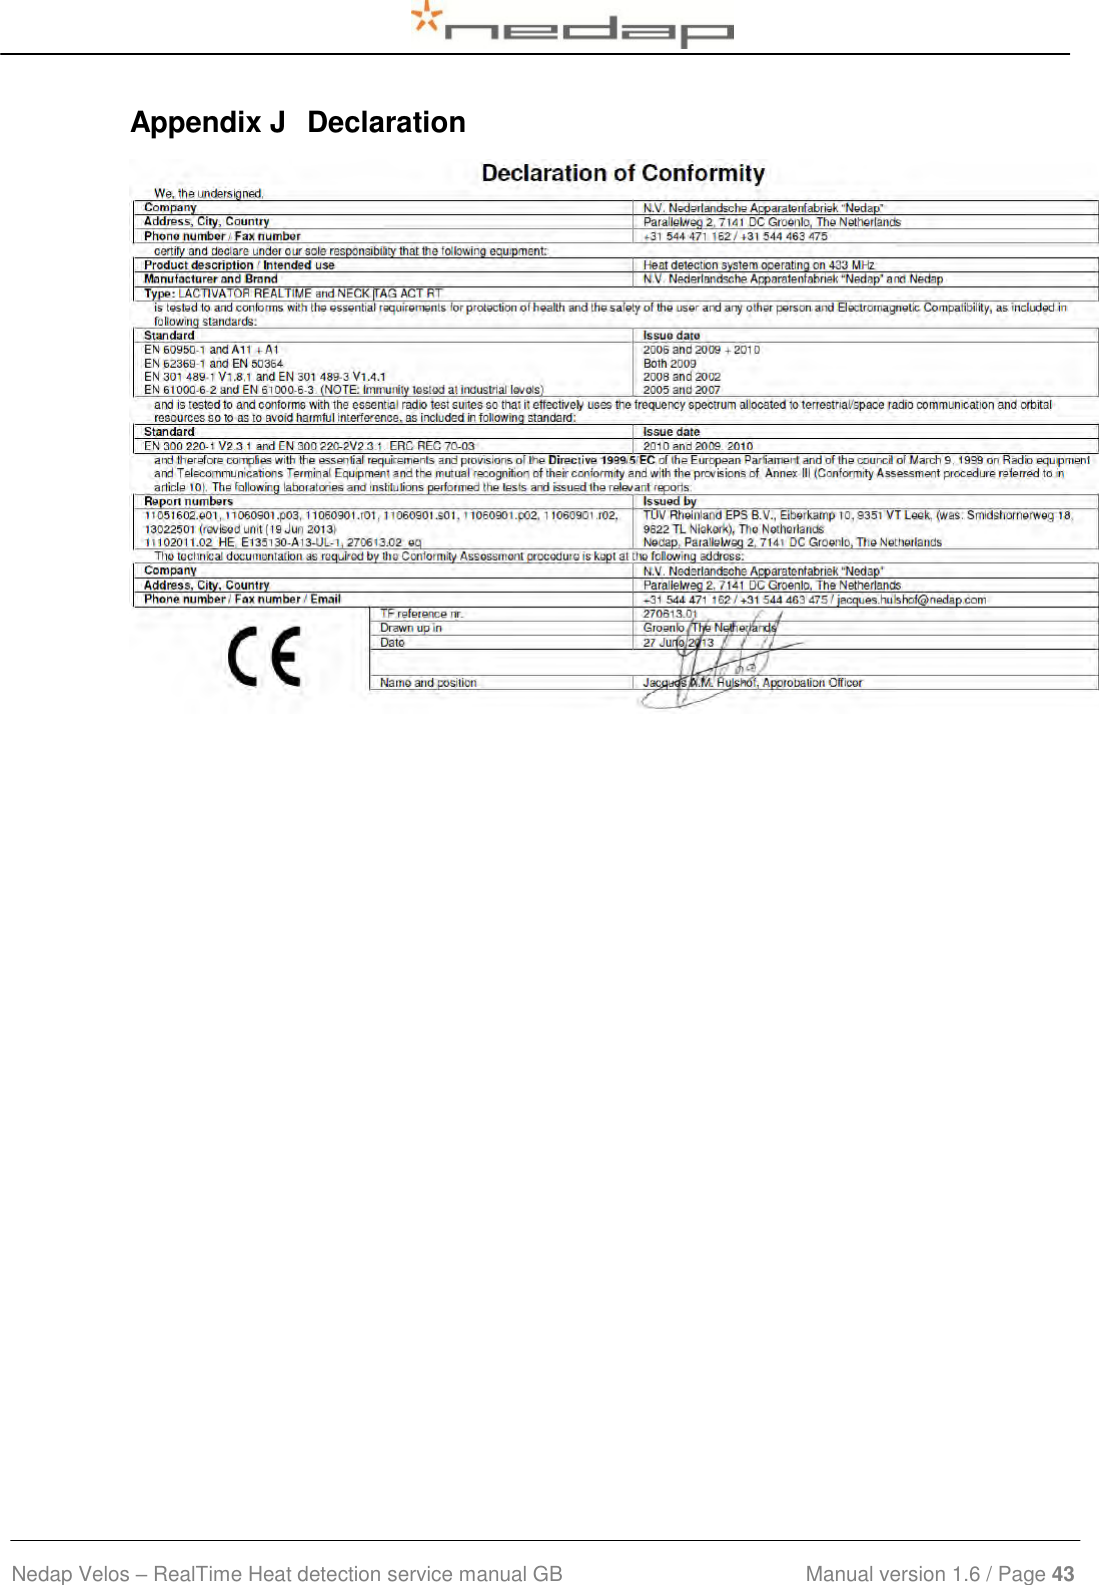  Nedap Velos – RealTime Heat detection service manual GB                            Manual version 1.6 / Page 43  Appendix J  Declaration  